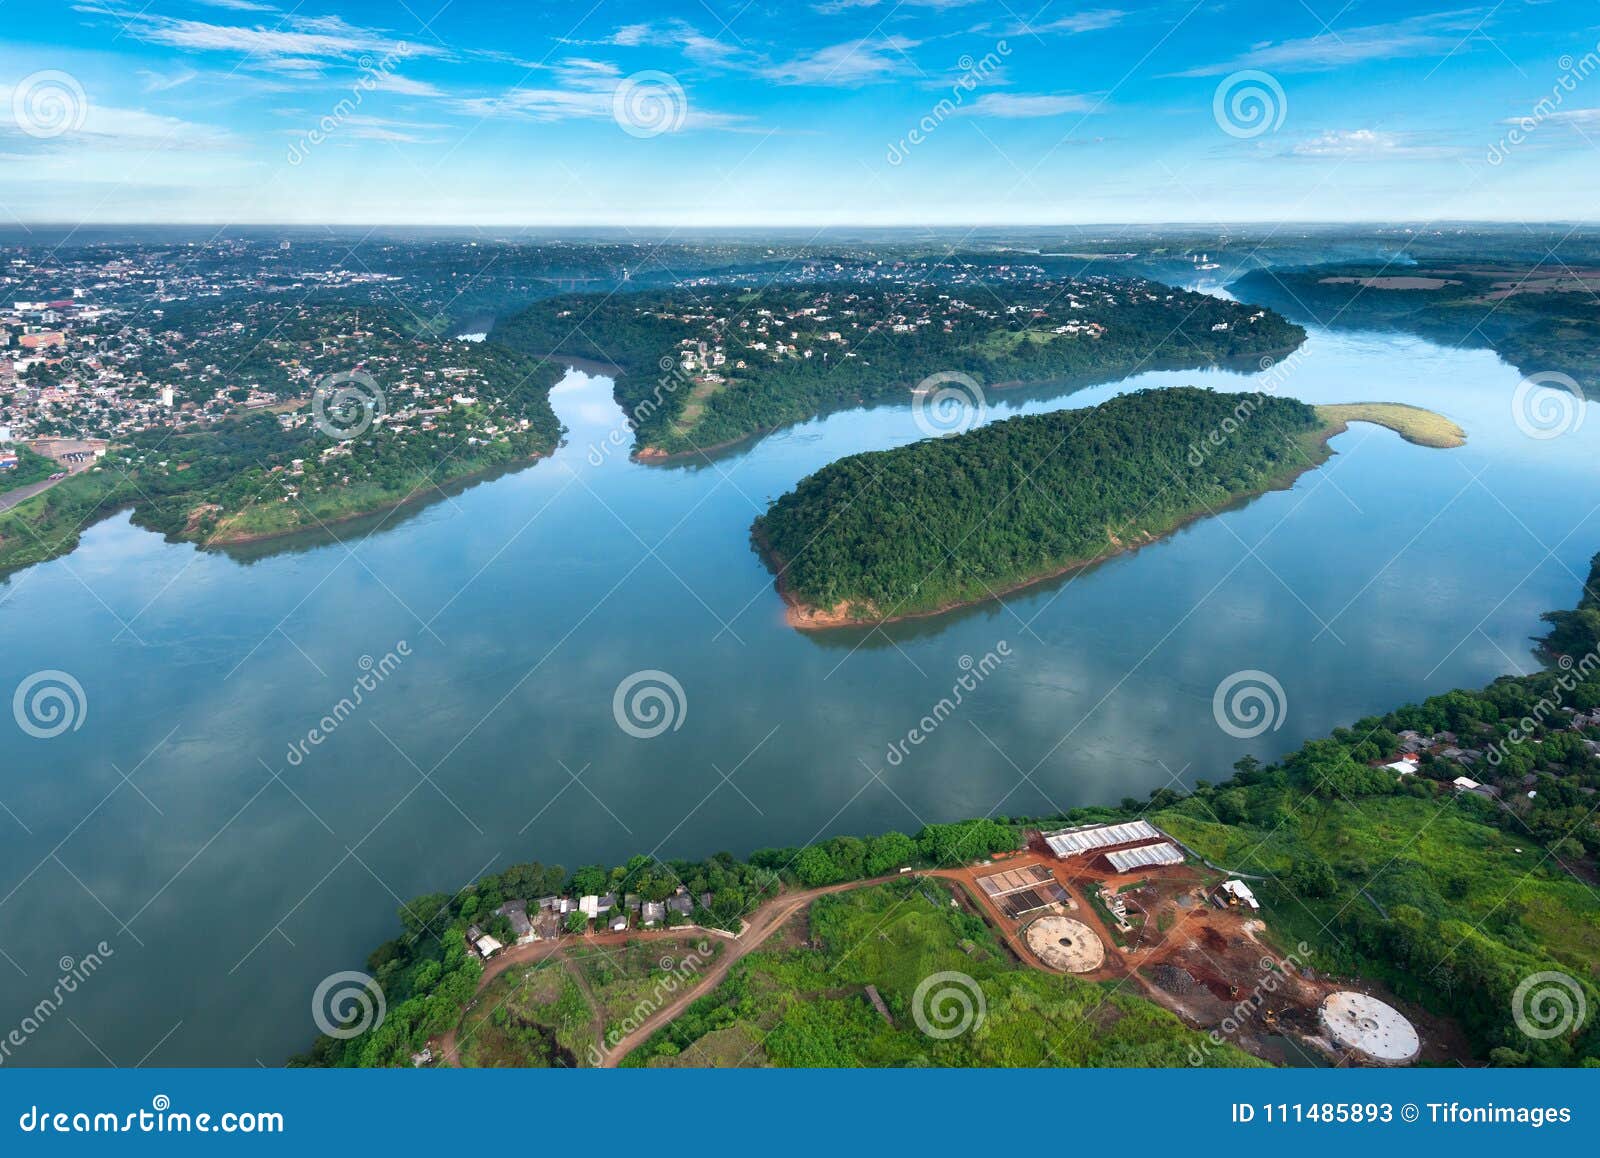 aerial view of parana river